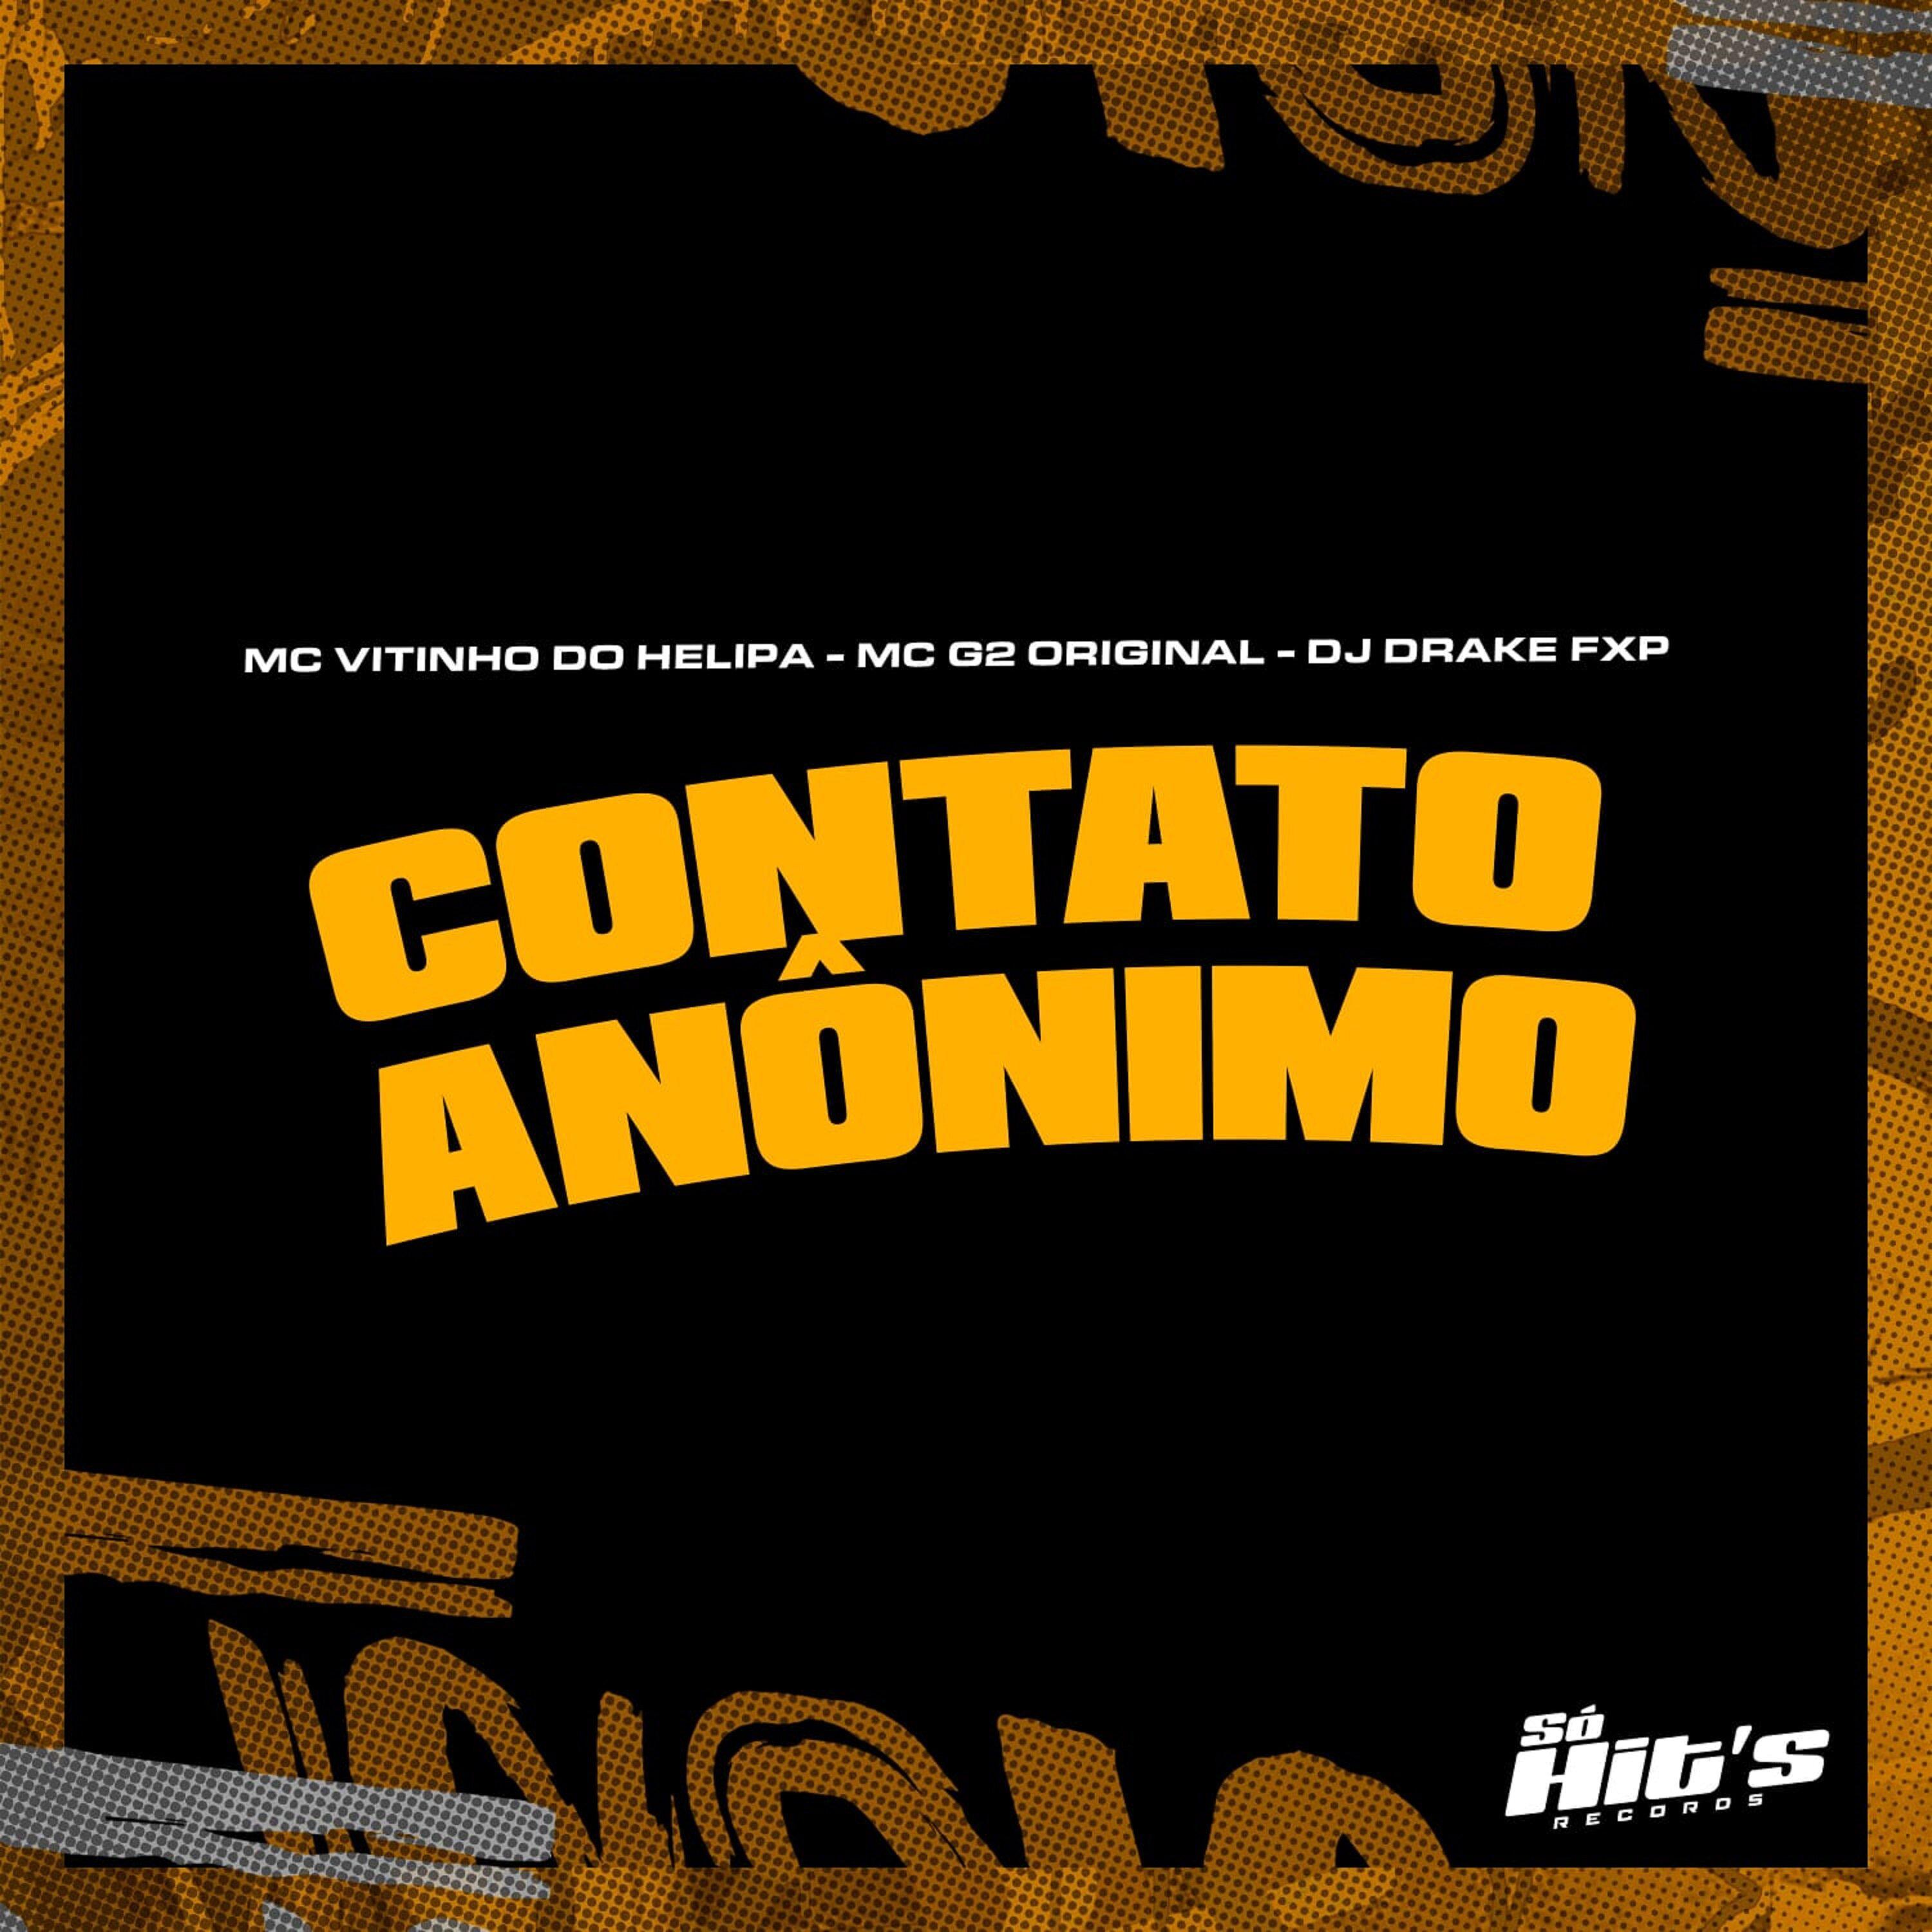 Dj DRAKE FXP - Contato Anônimo (feat. MC VITINHO DO HELIPA)